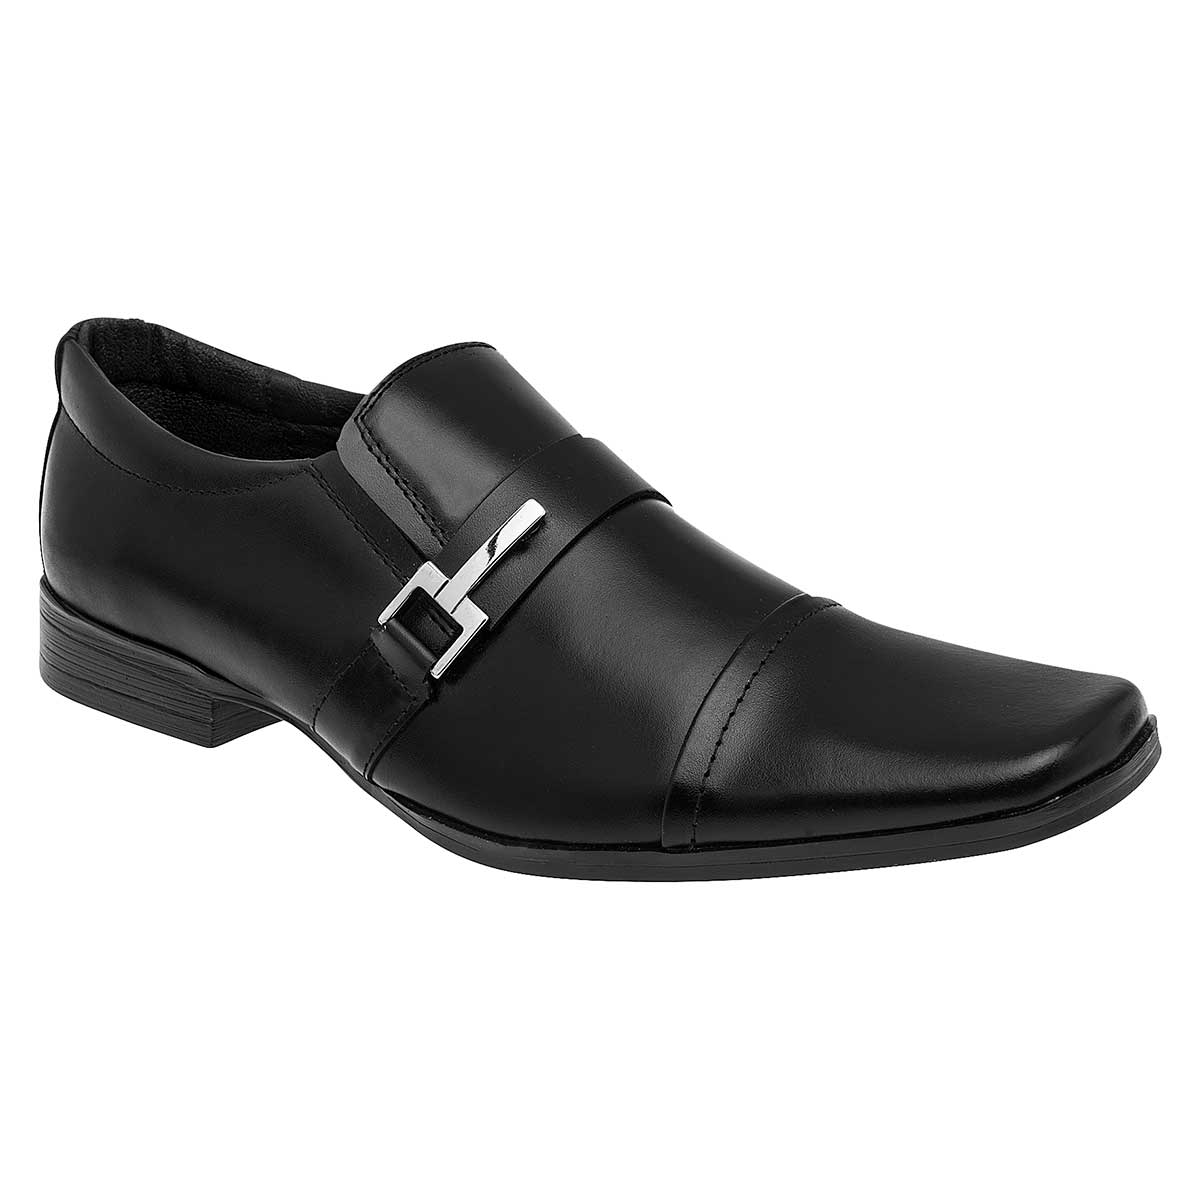 Pakar.com - Mayo: Regalos para mamá | Zapato casual para hombre cod-105746